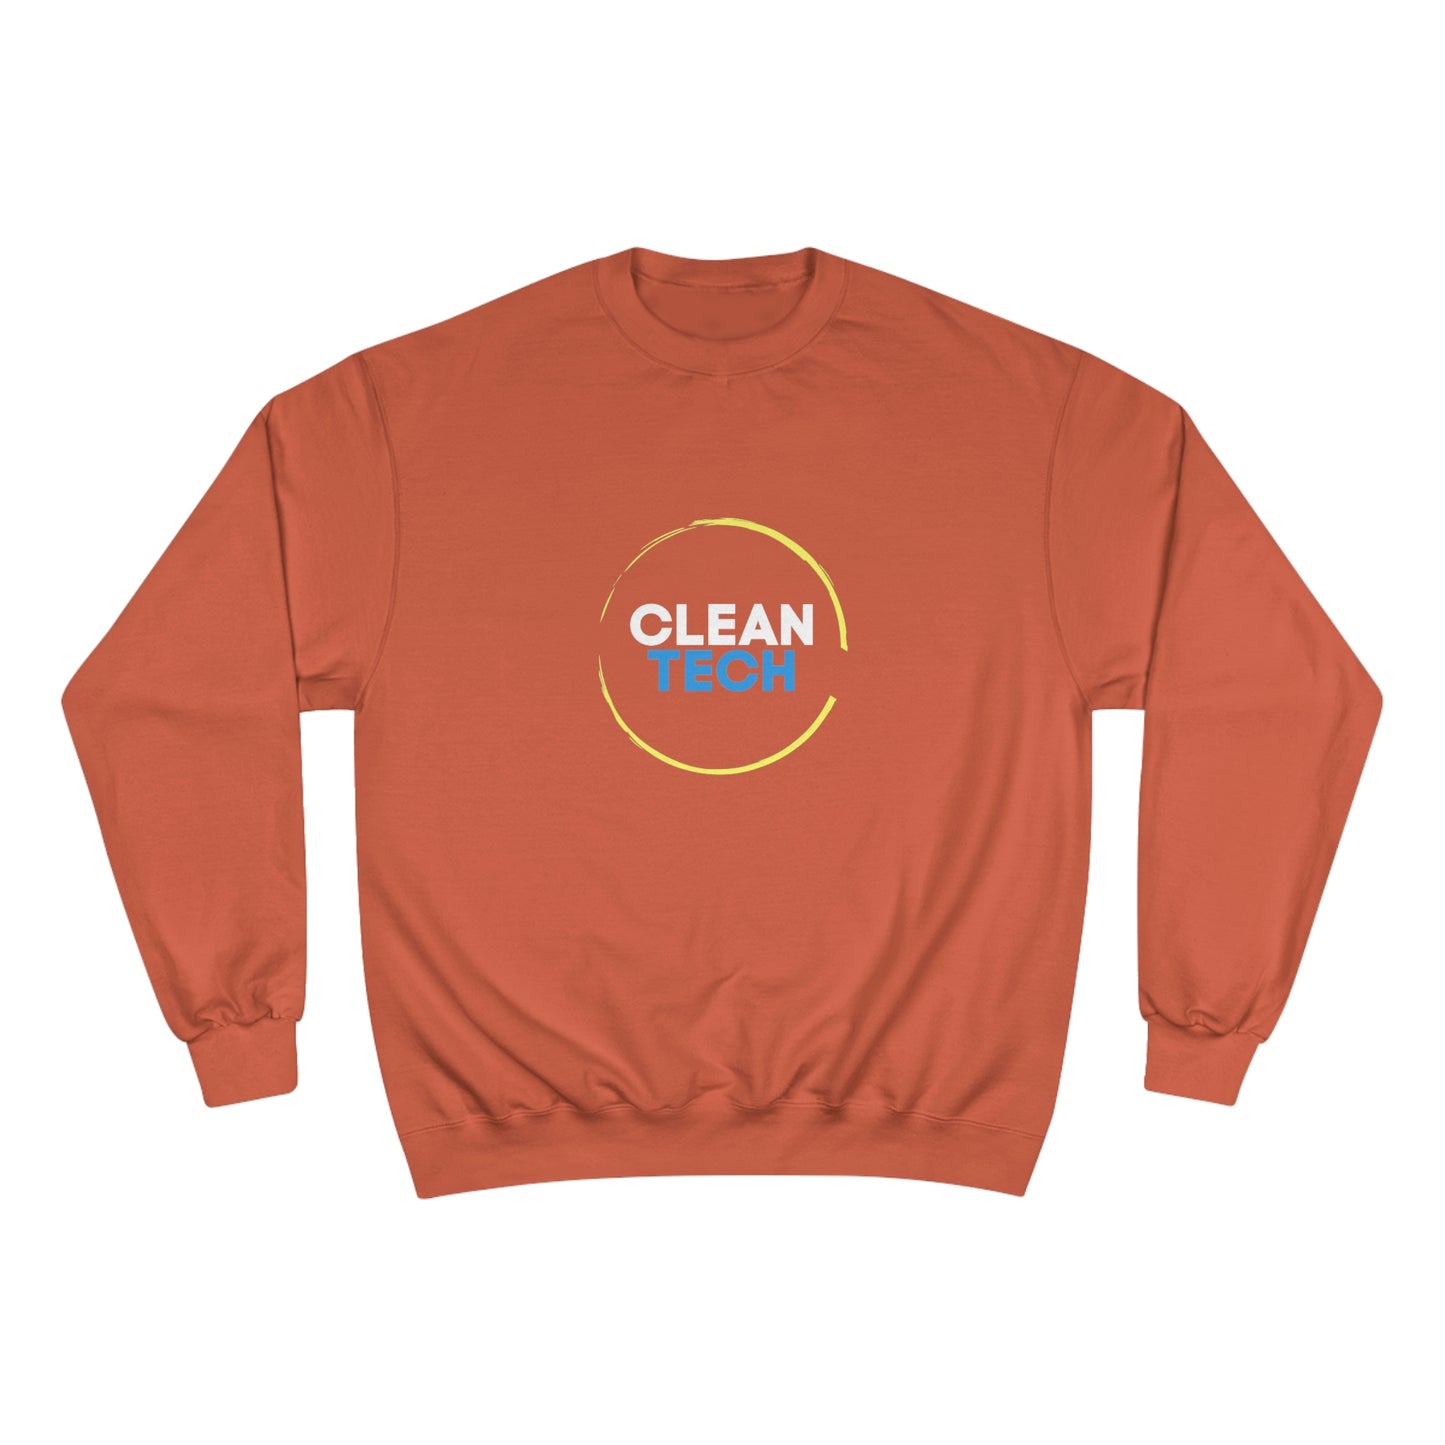 Champion Sweatshirt - CLEANTECH